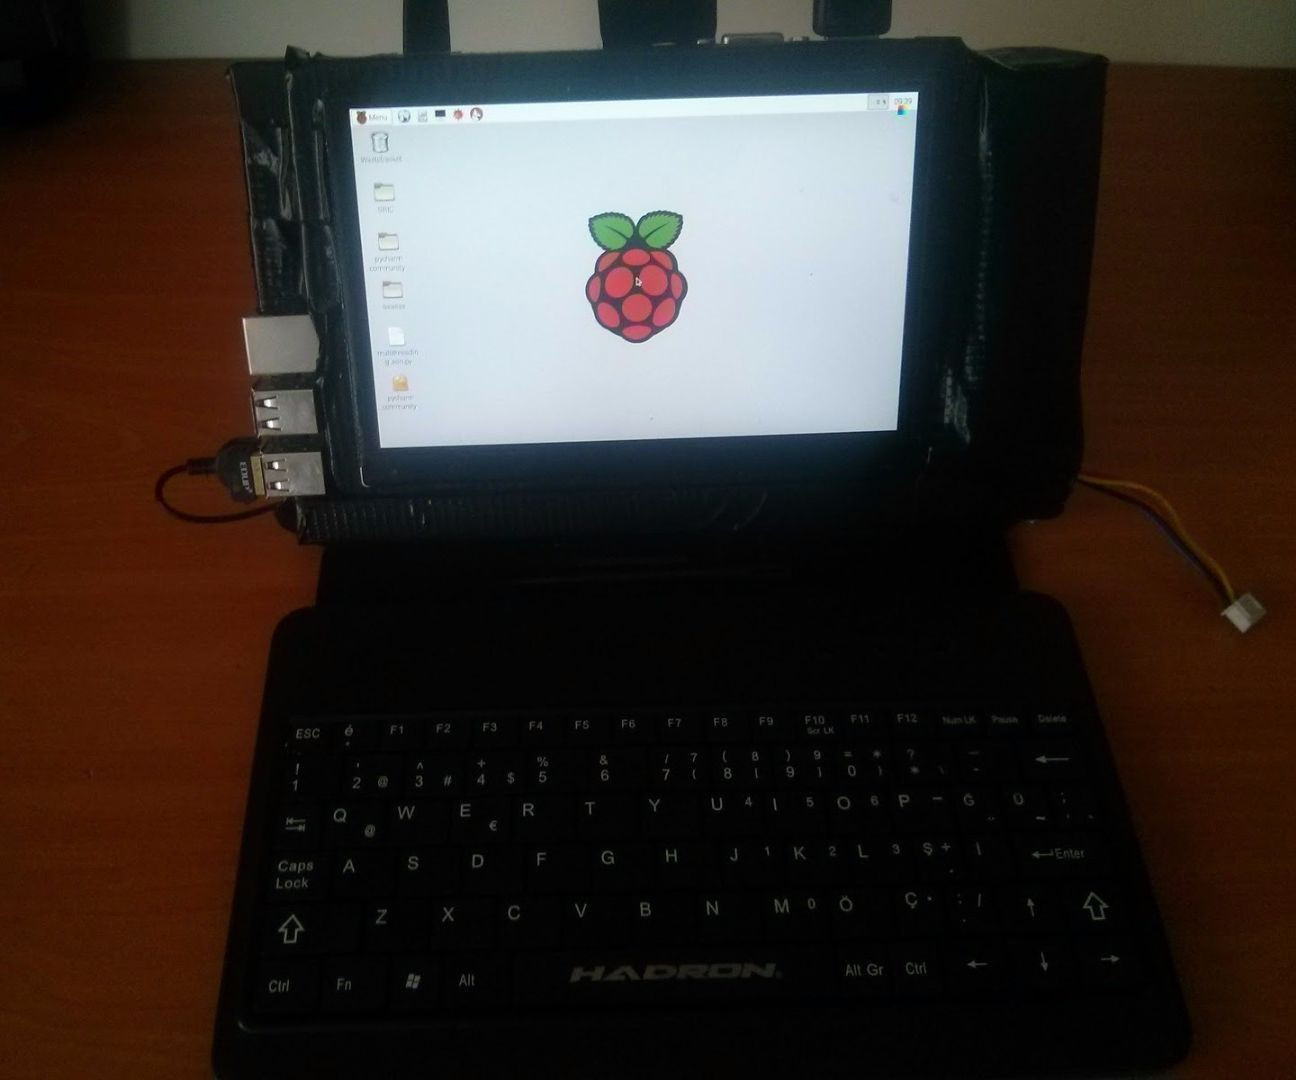 Best ideas about Raspberry Pi Laptop DIY
. Save or Pin DIY Raspberry Pi 2 Laptop Now.